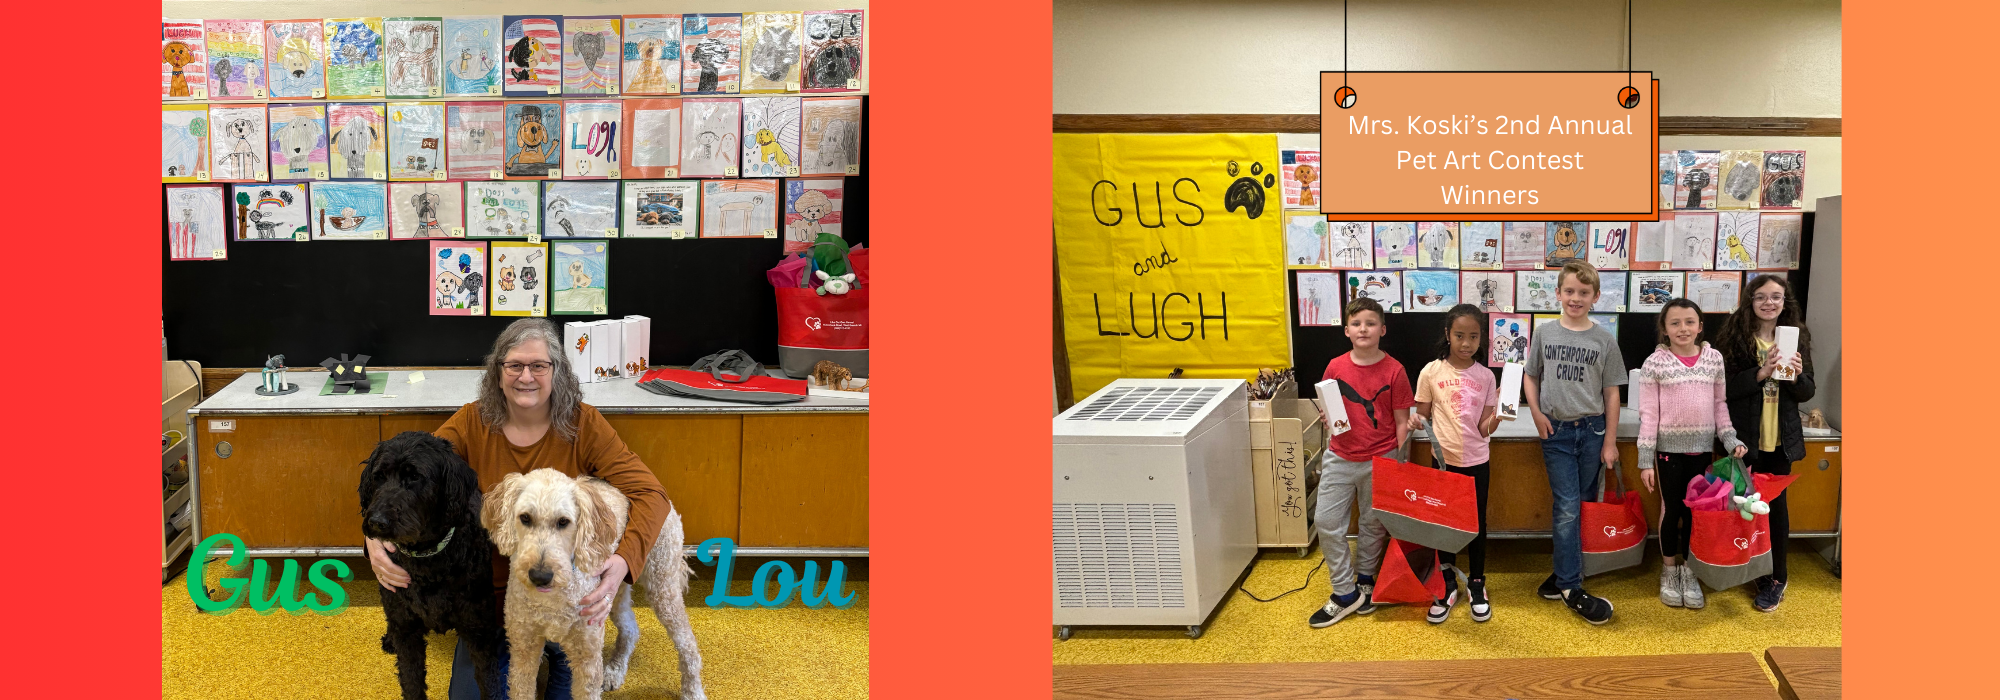 Gus , Lou. Mrs. Koski's 2nd Annual Pet Art Contest Winners